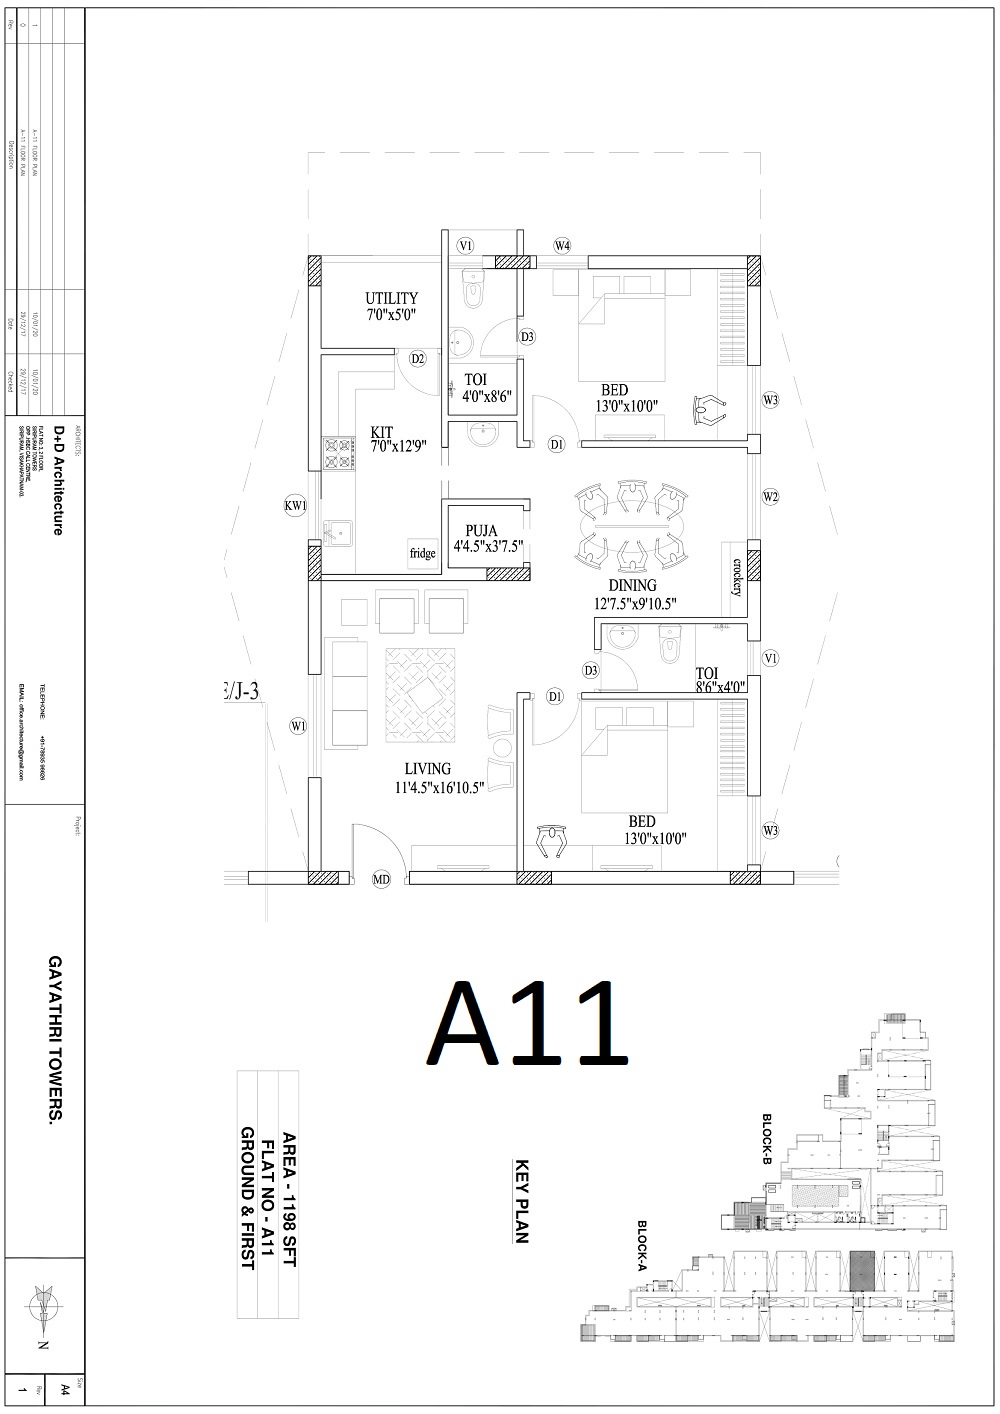 A11 - Floor Plan